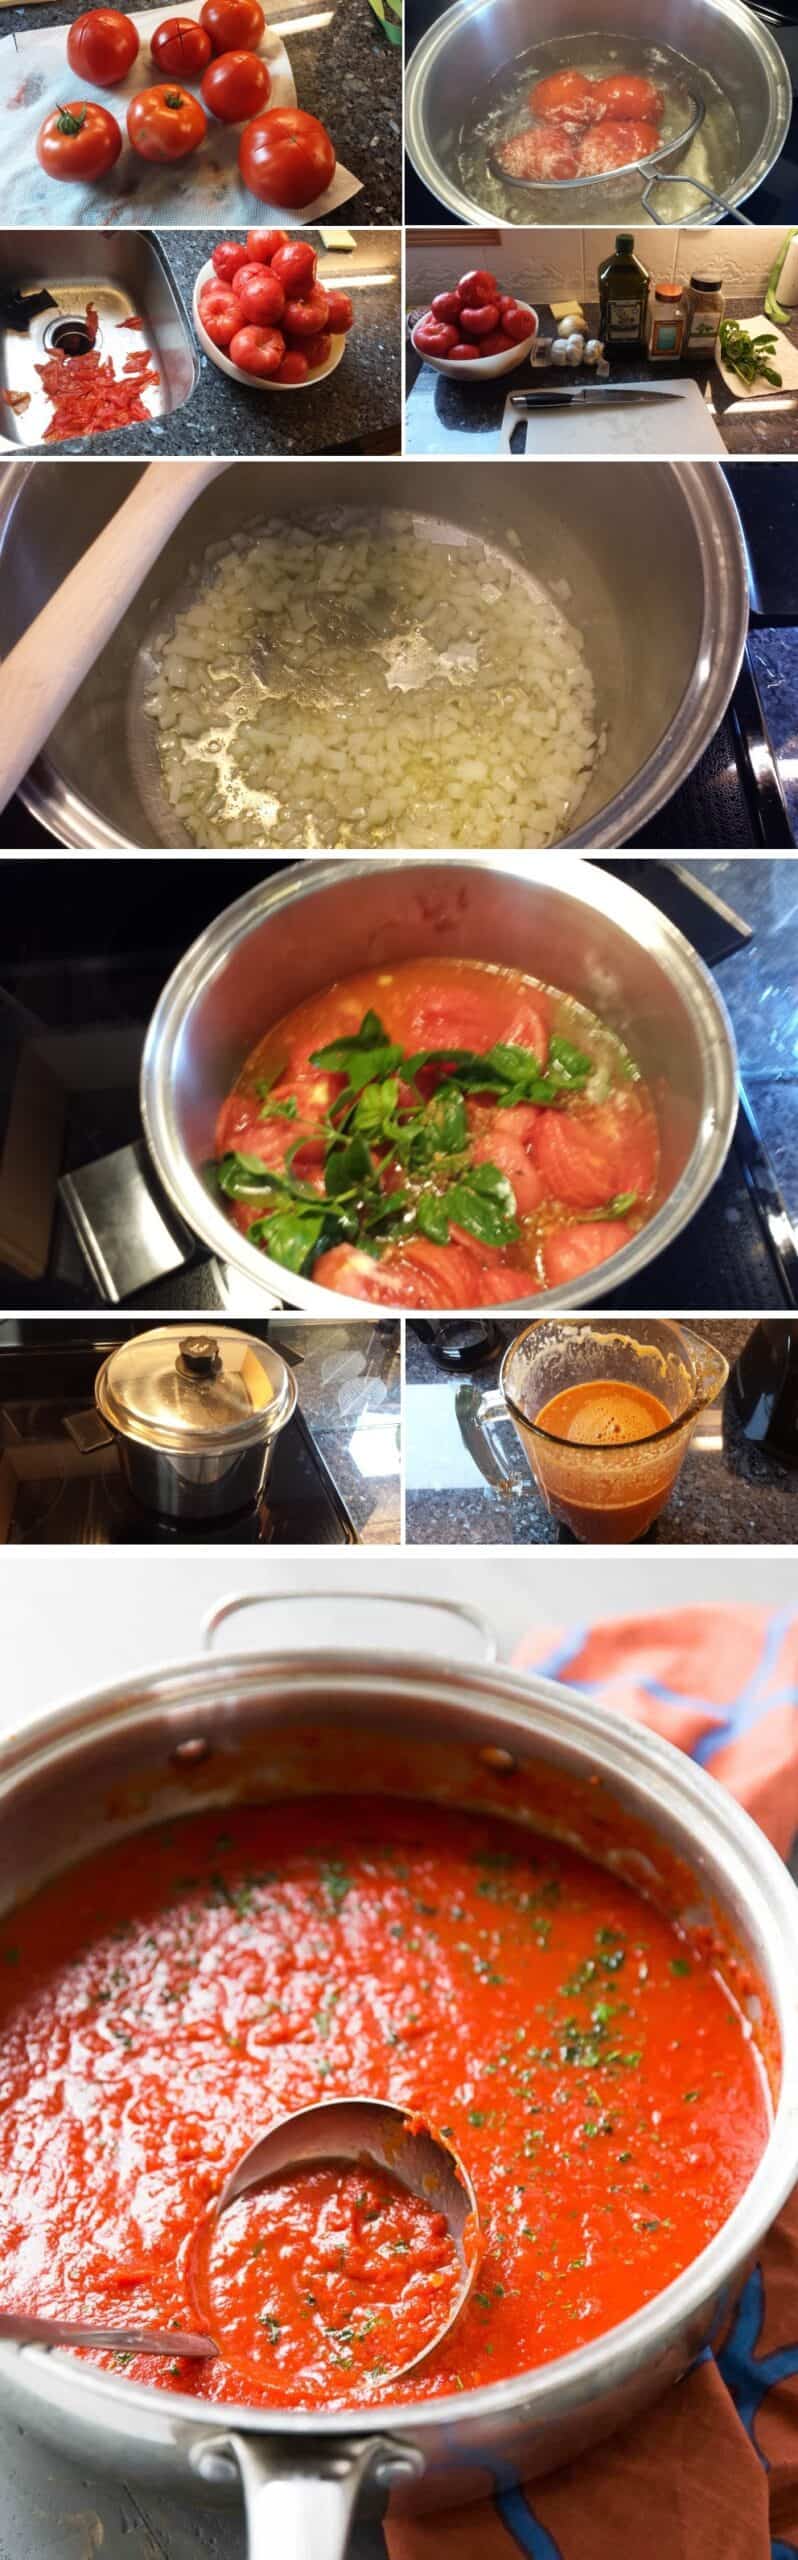 How to Make Homemade Marinara Sauce - Step By Step